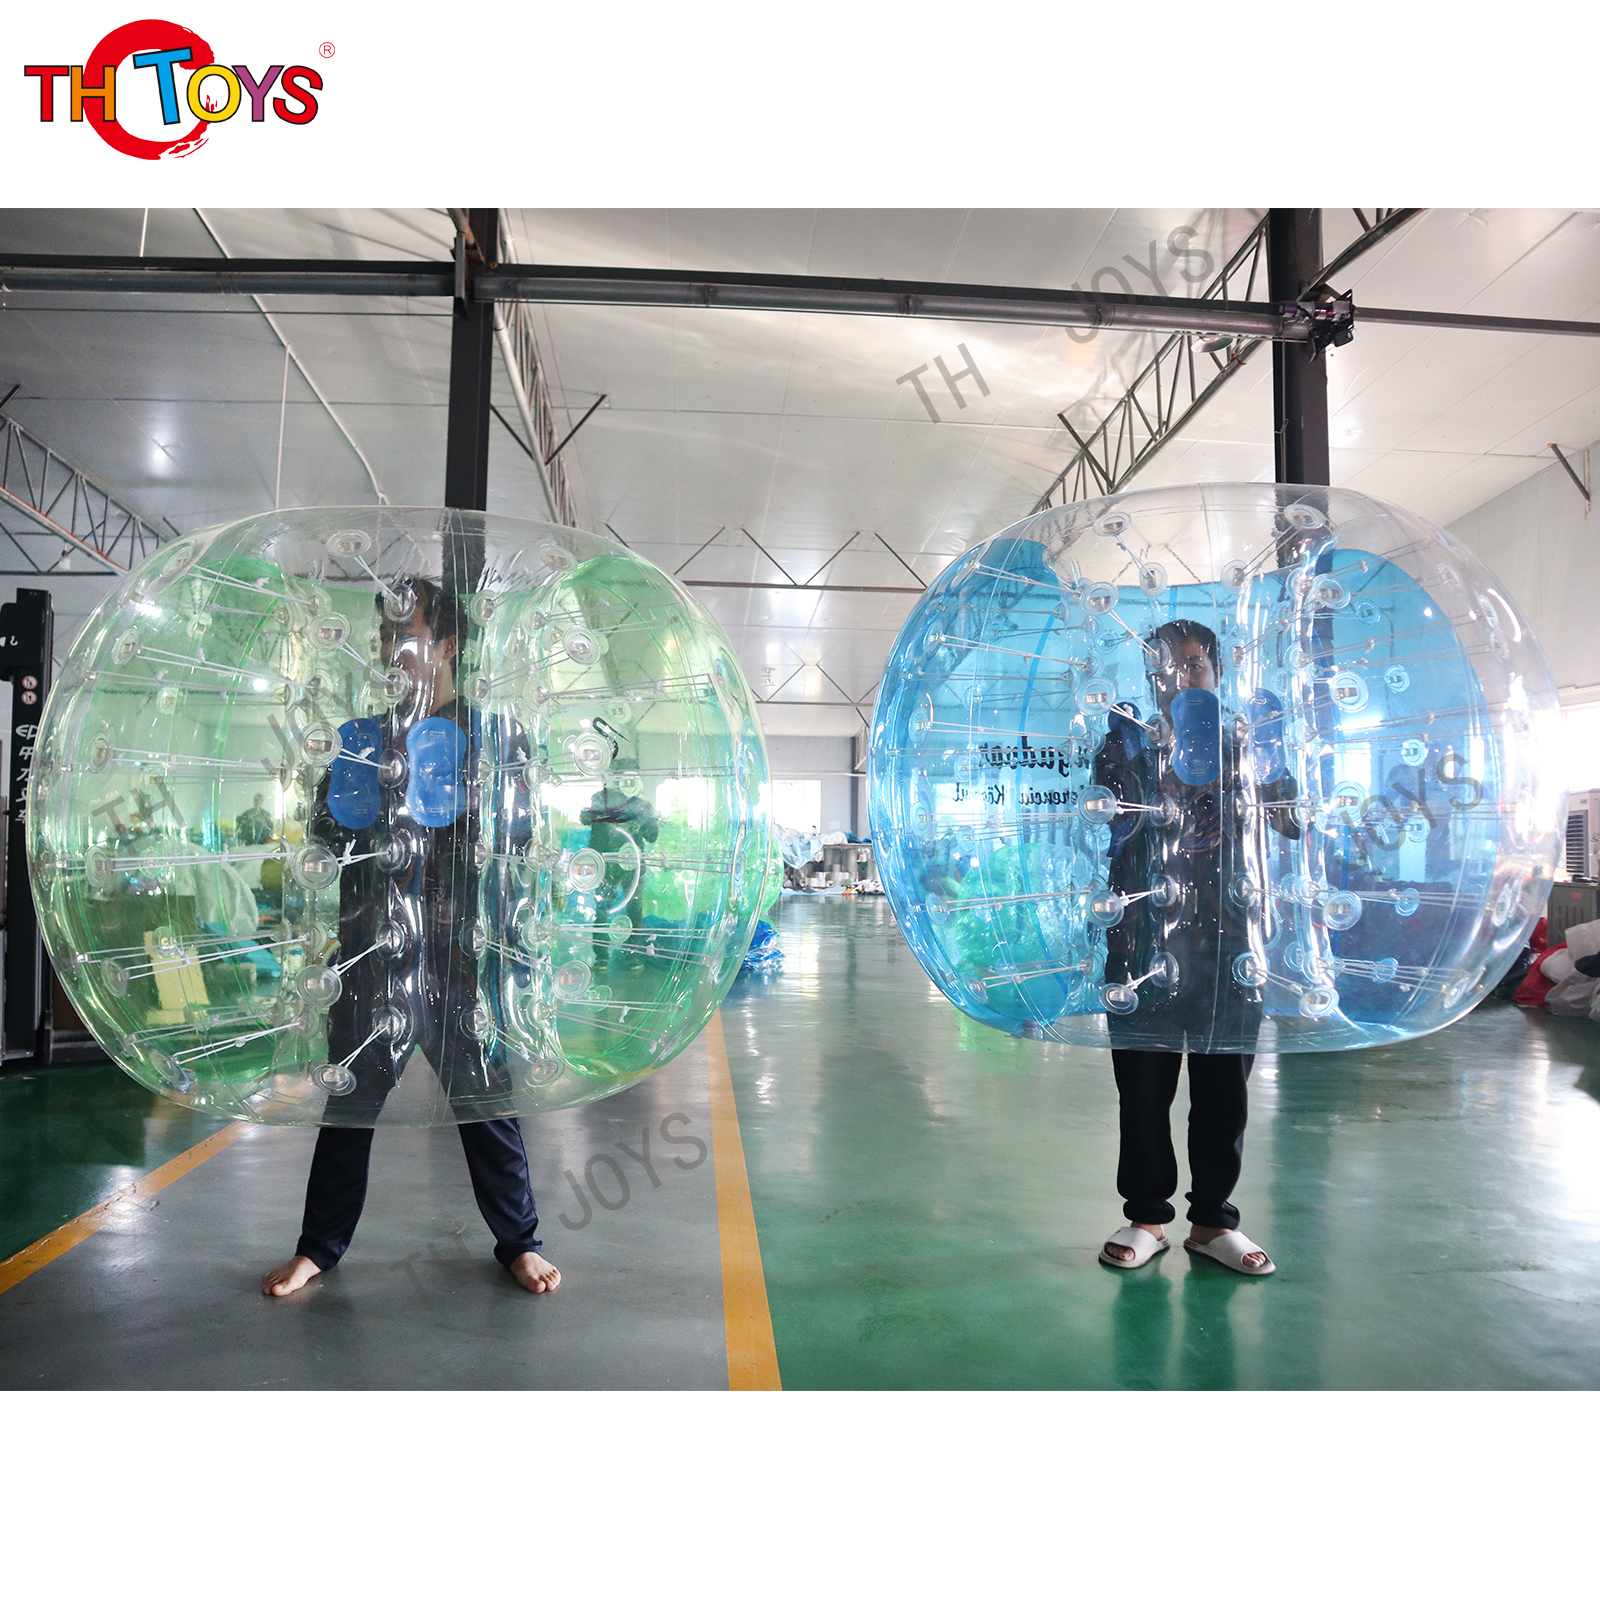 Bubble soccer-1